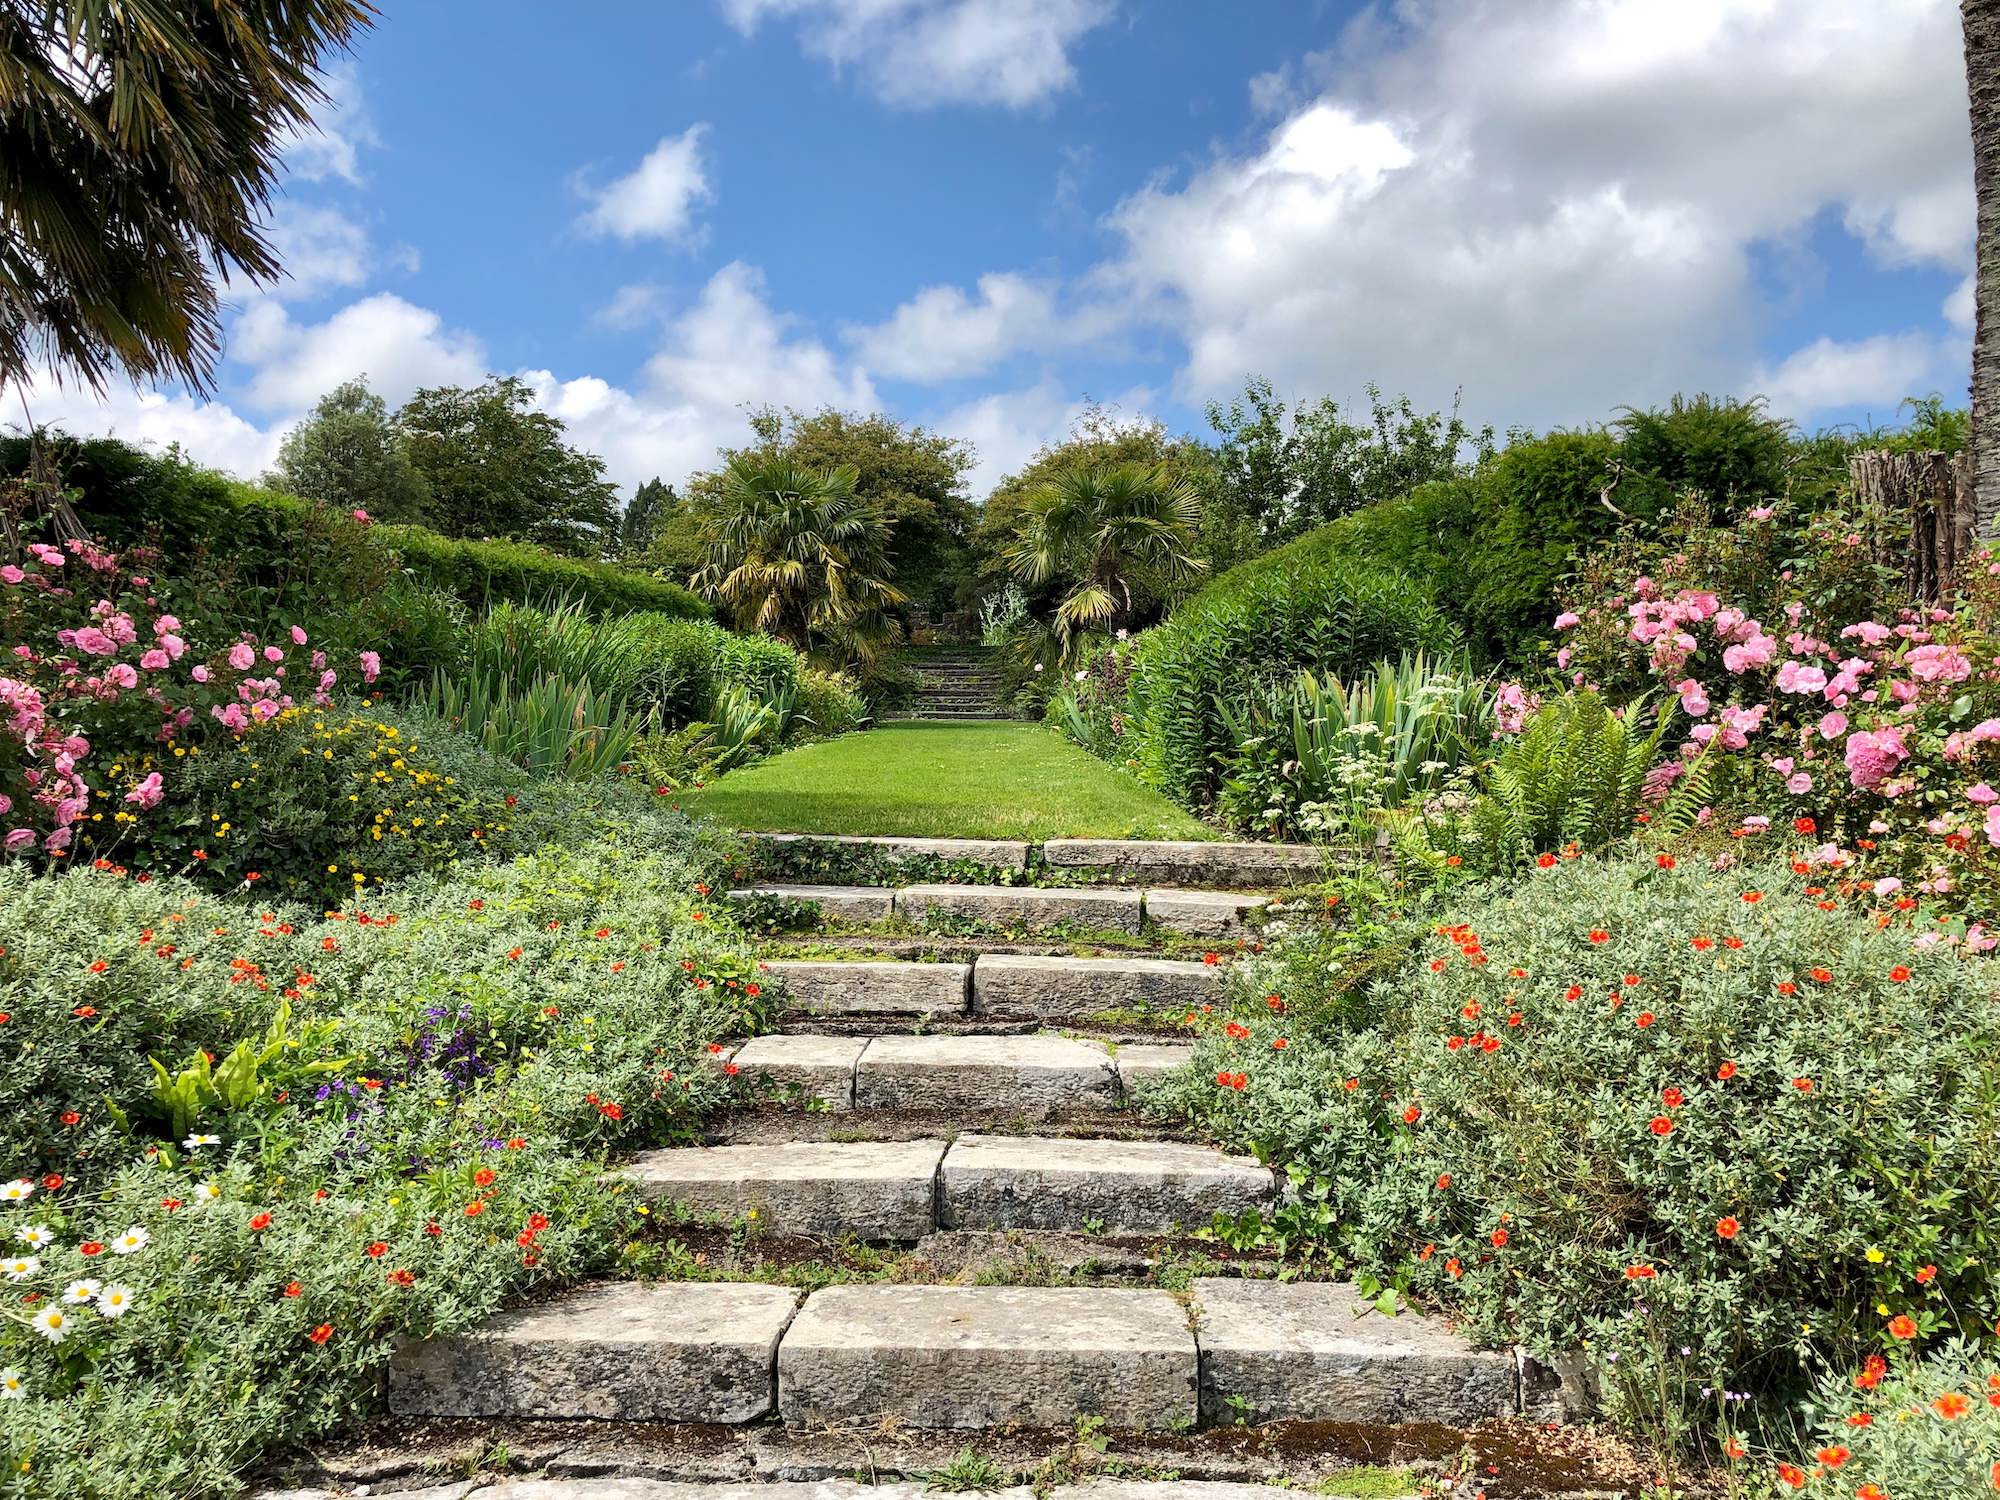 Castle garden in Ireland